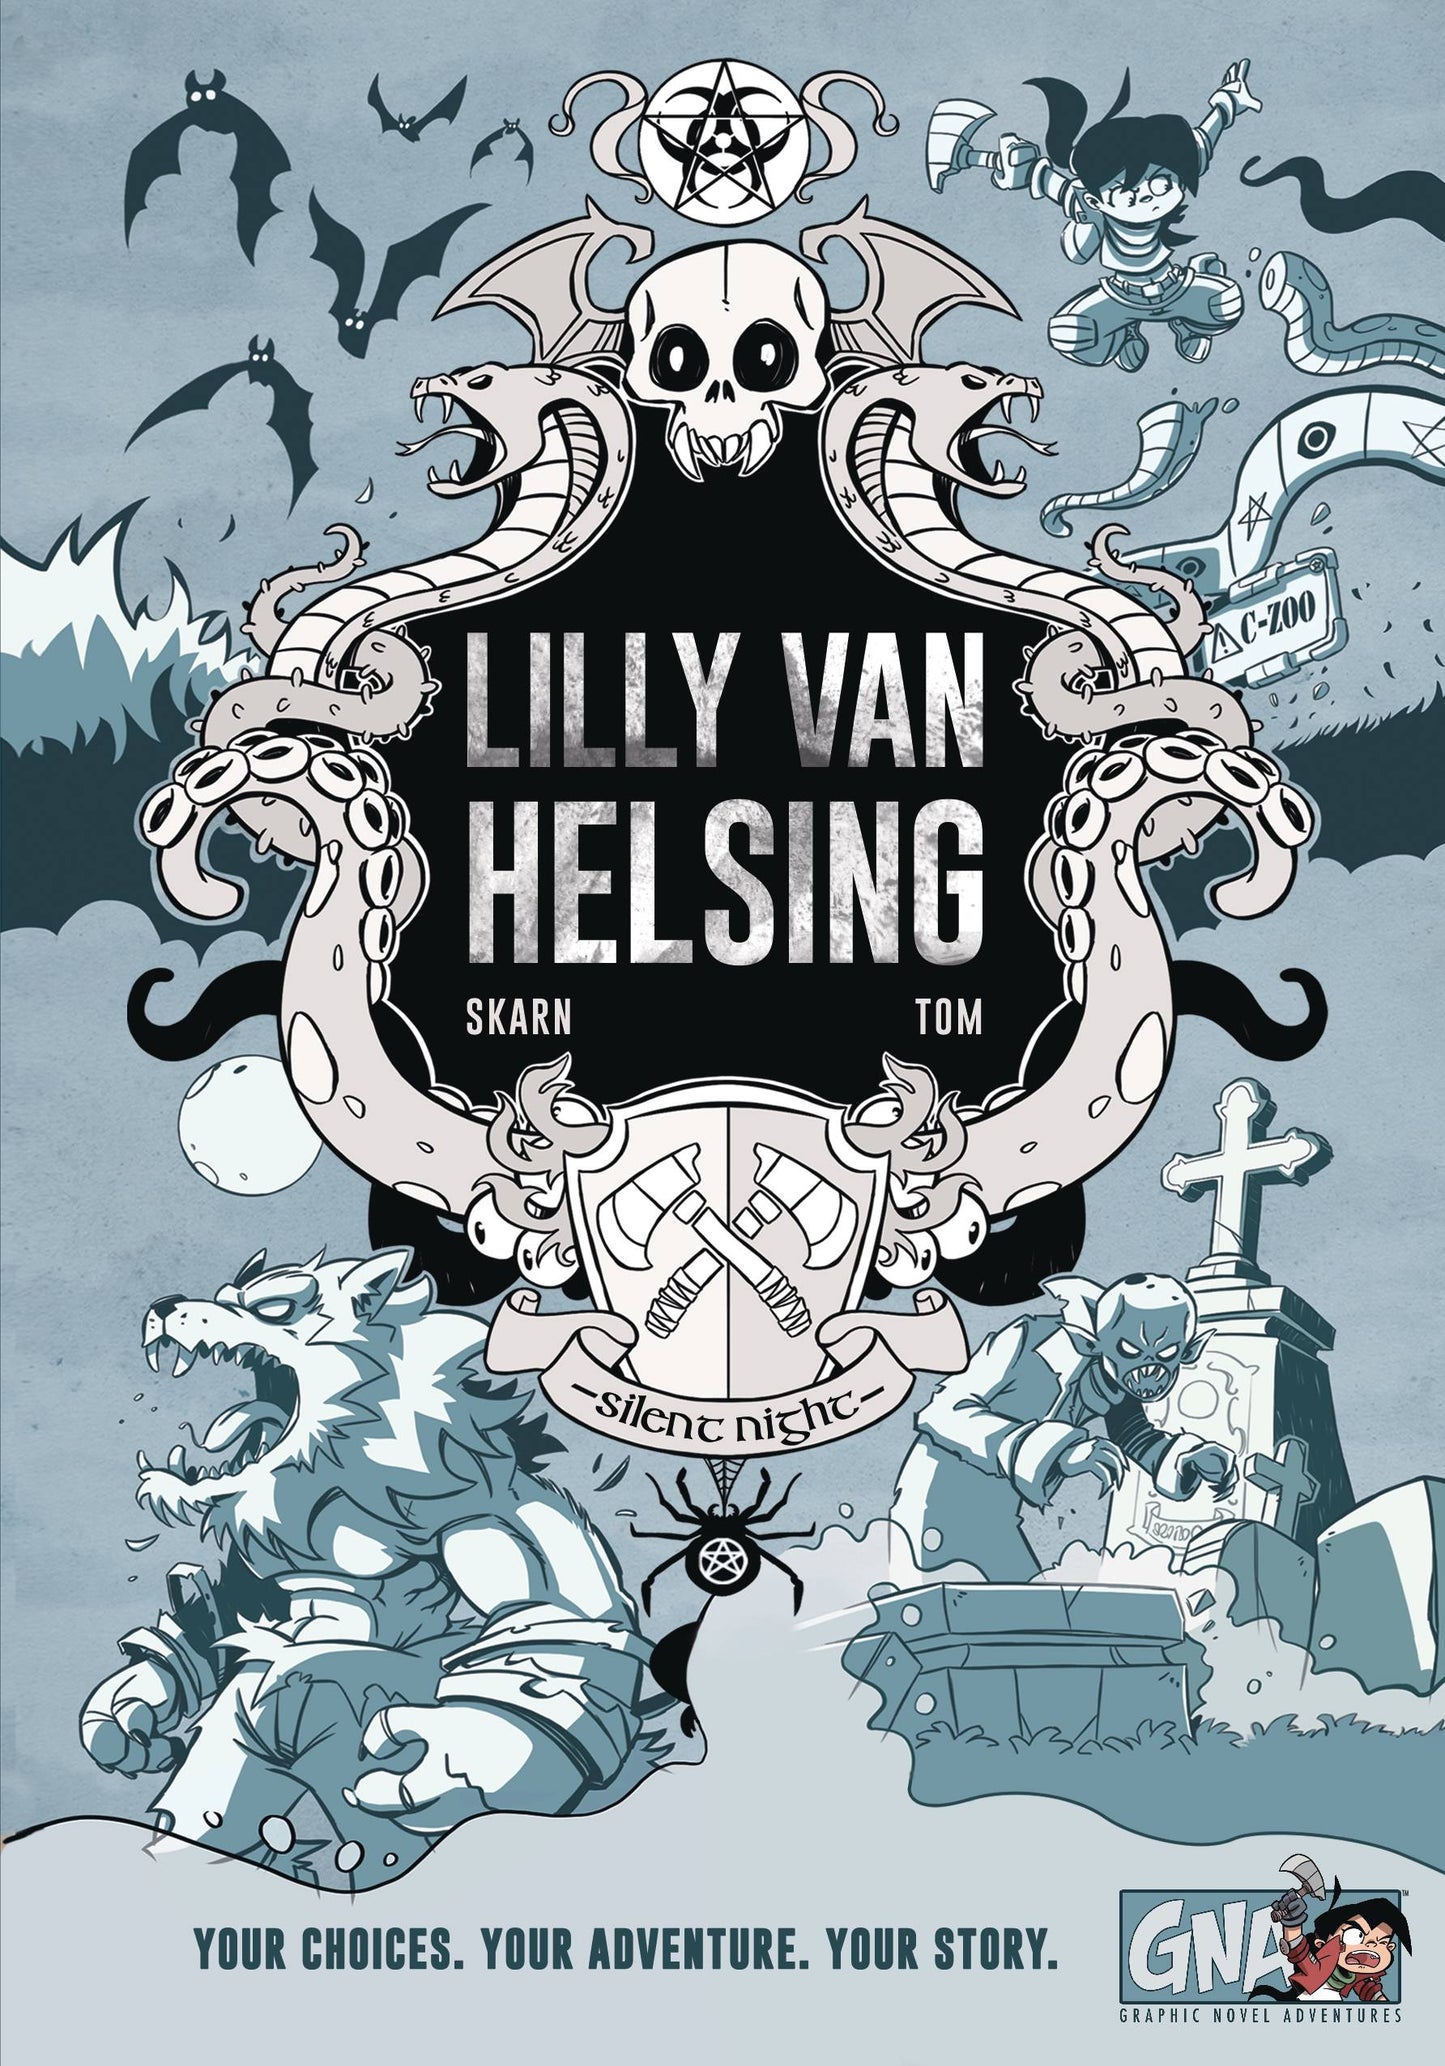 Lilly Van Helsing Graphic Novel Adventure